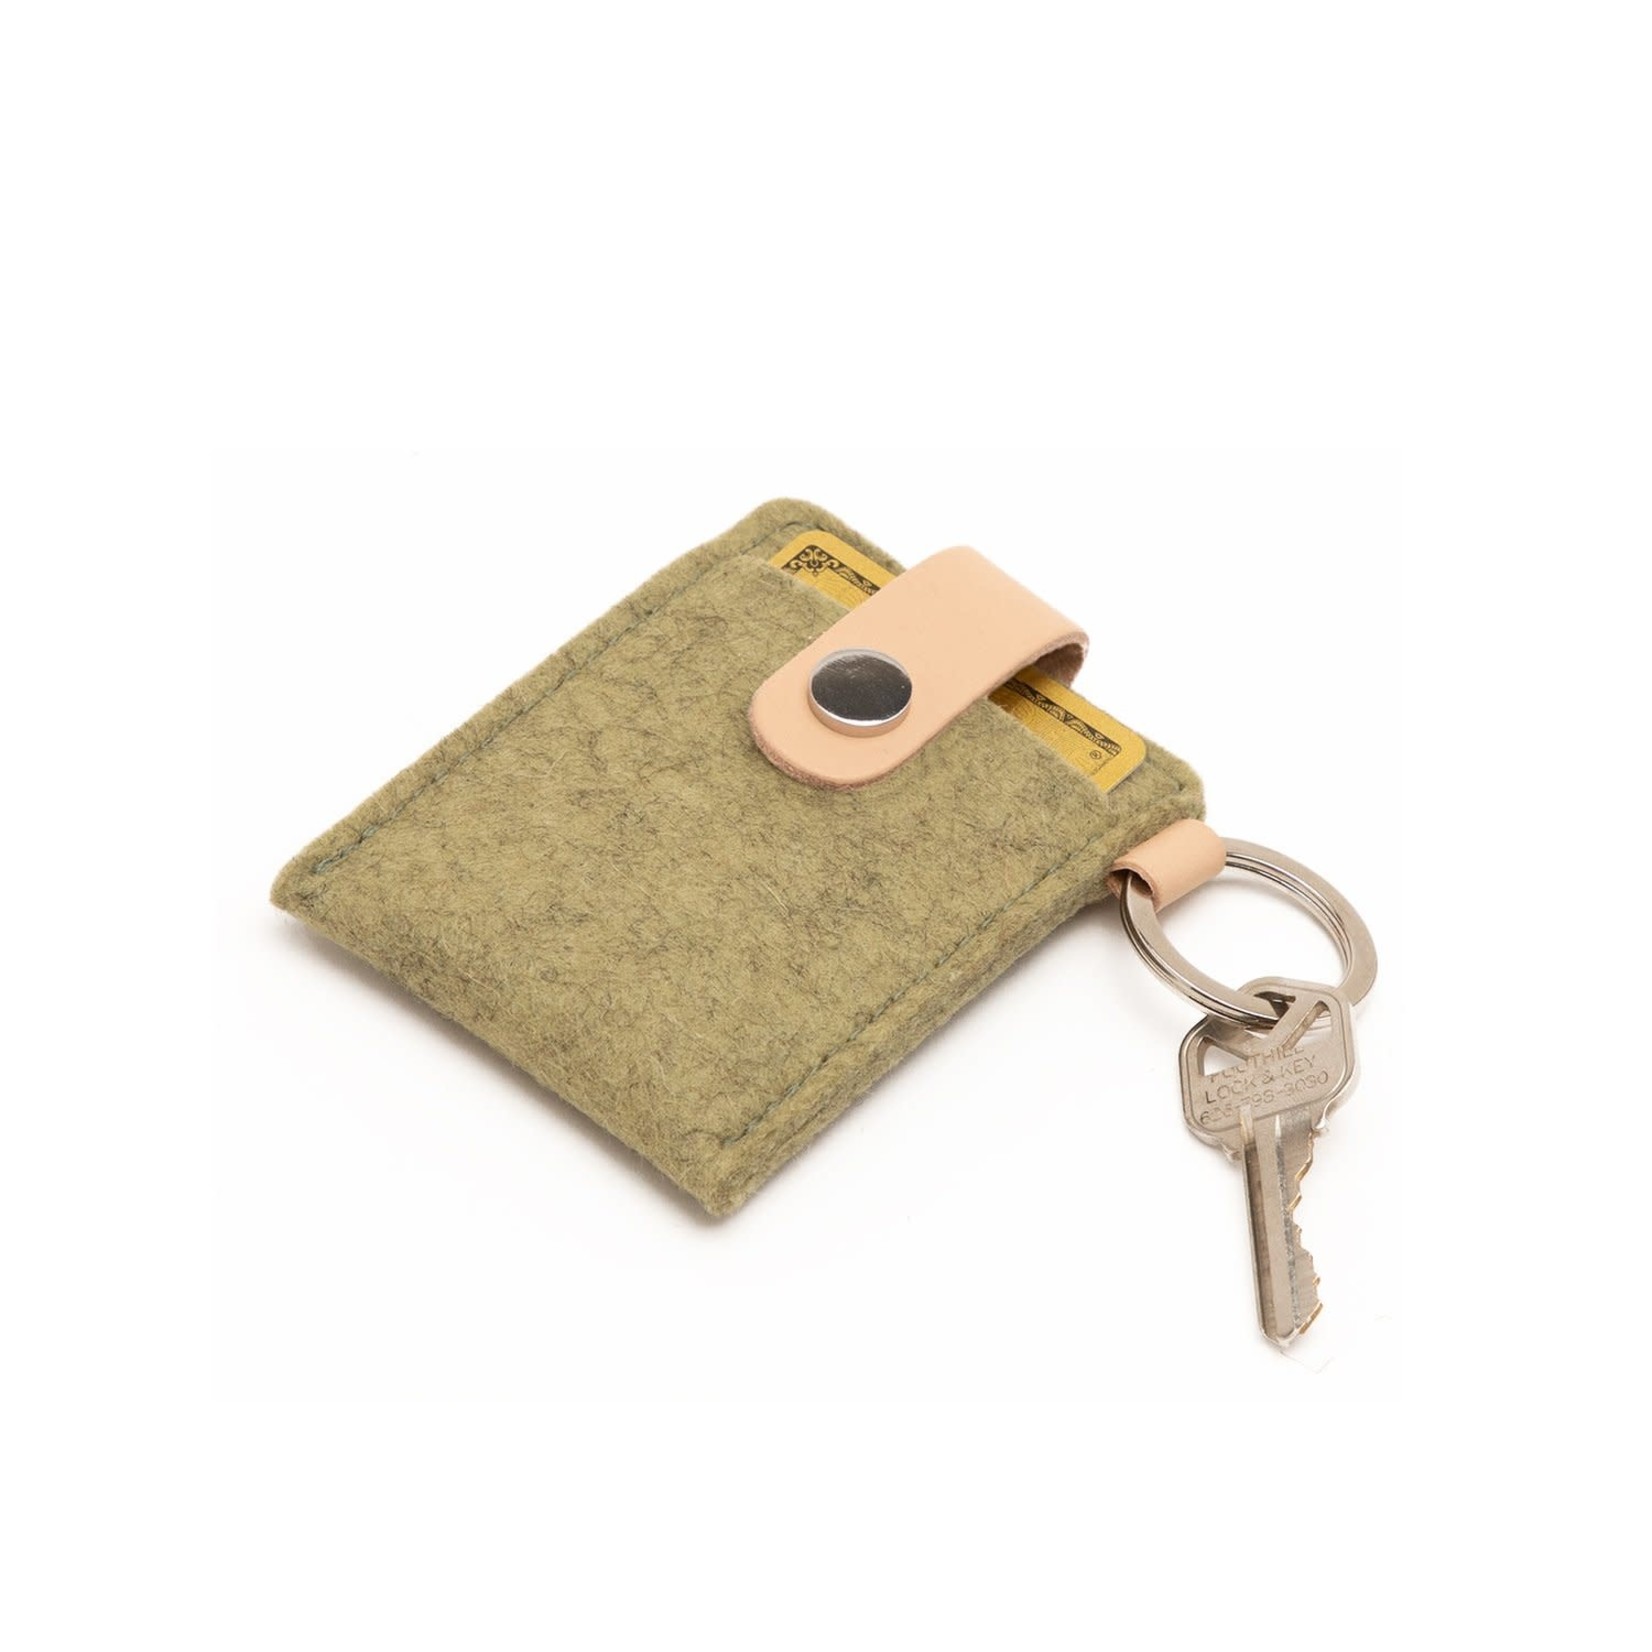 Felt Key Card + Leather Case